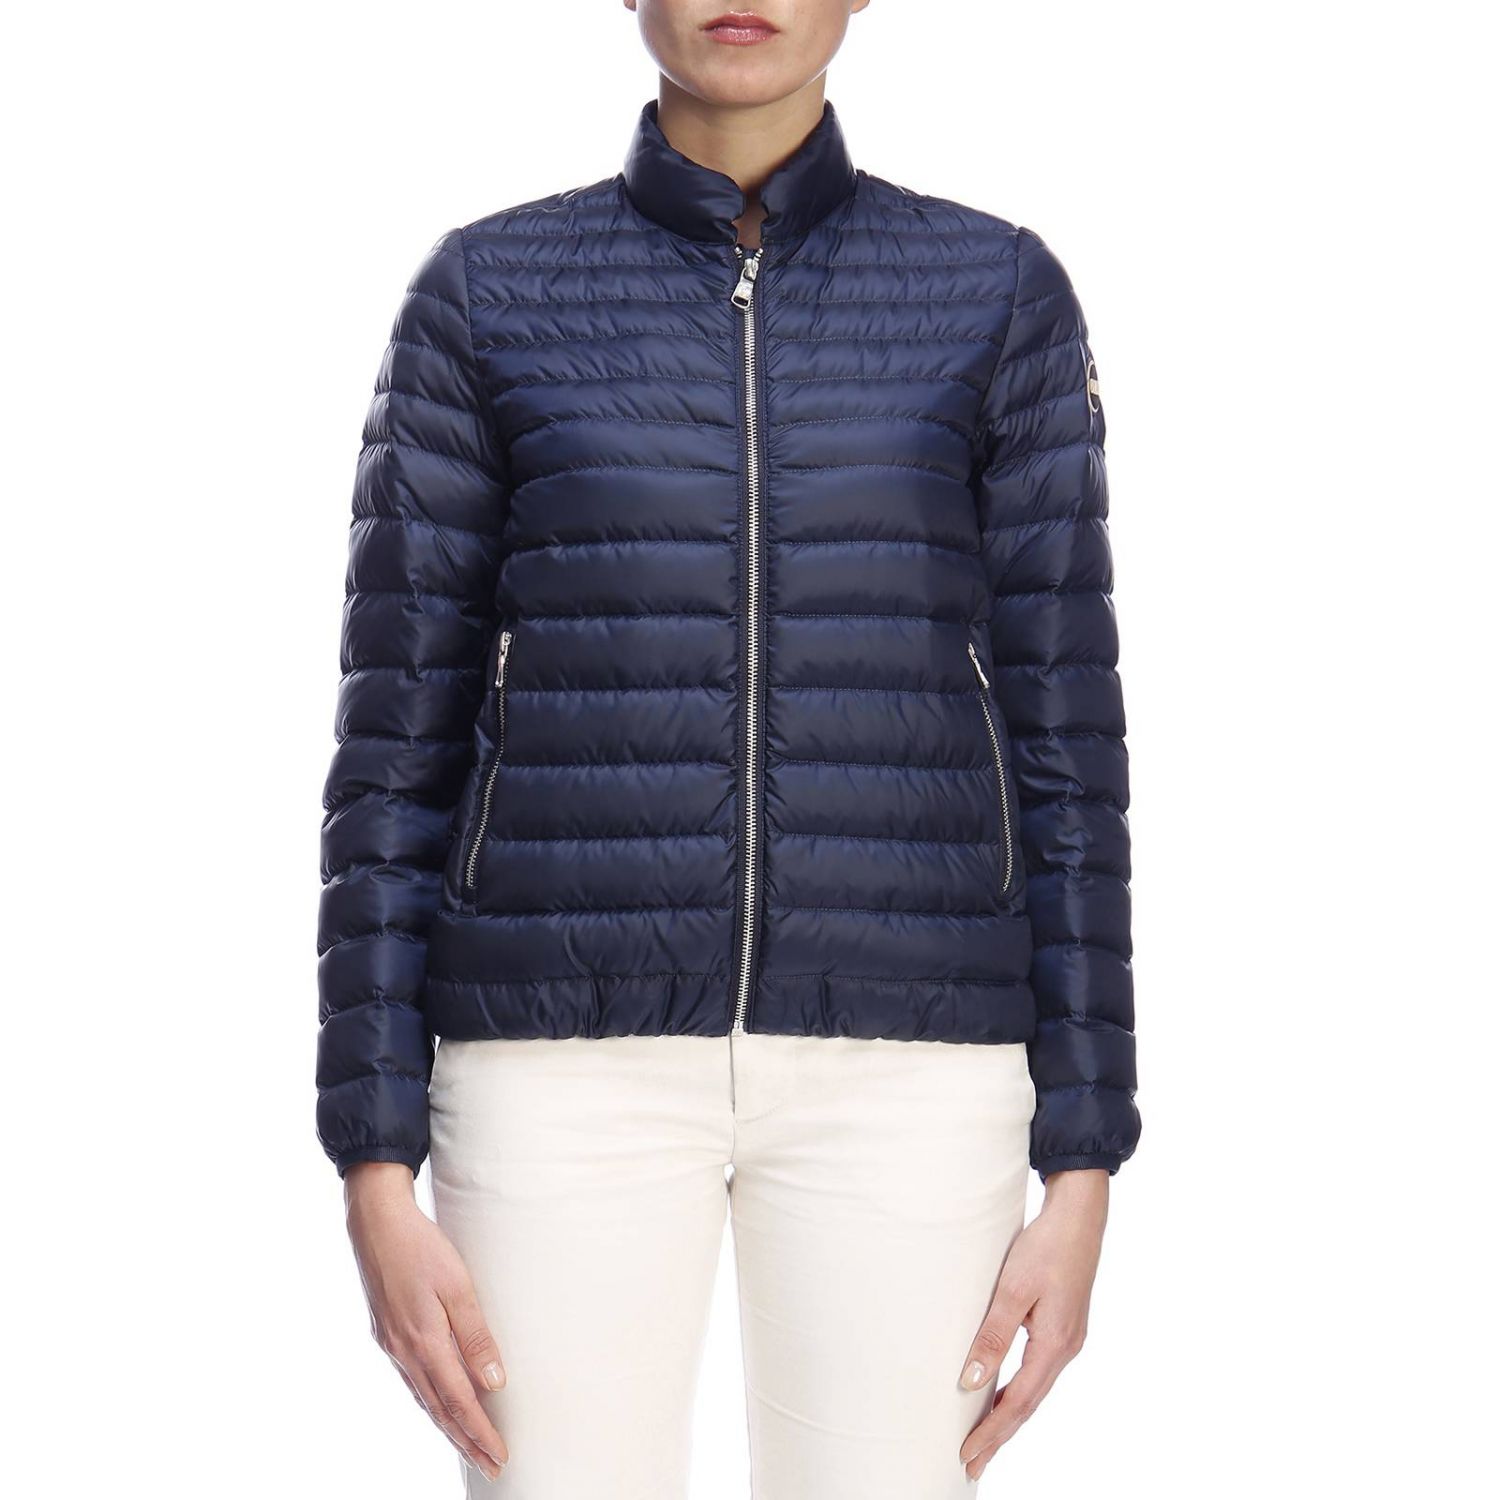 Colmar Outlet: jacket for woman - Navy | Colmar jacket 2170 1MQ online ...